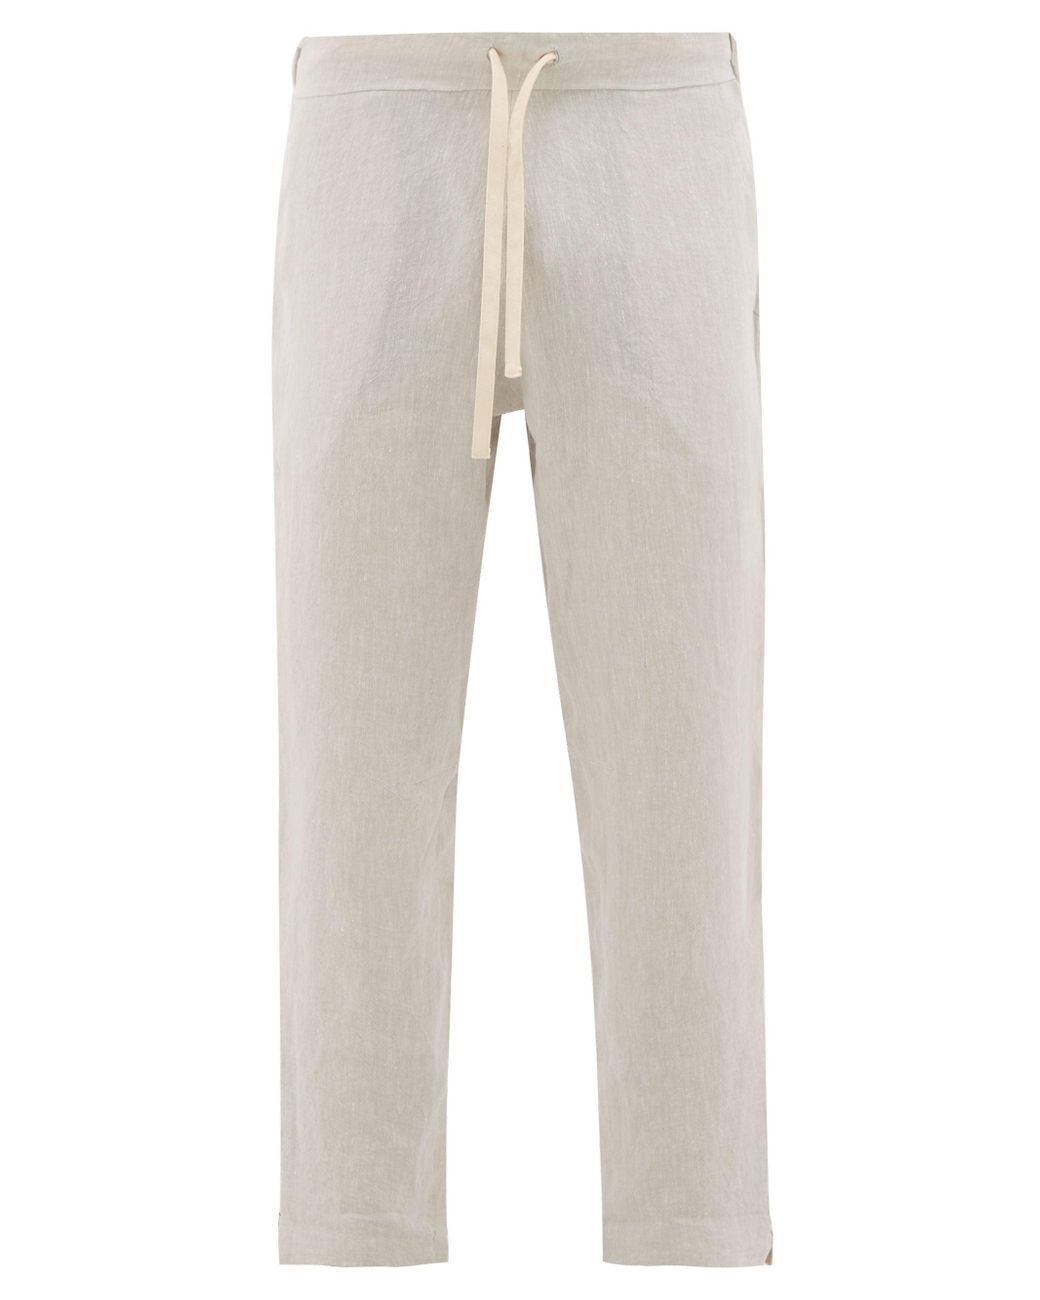 Marané Drawstring Linen Trousers in Beige (Natural) for Men - Lyst